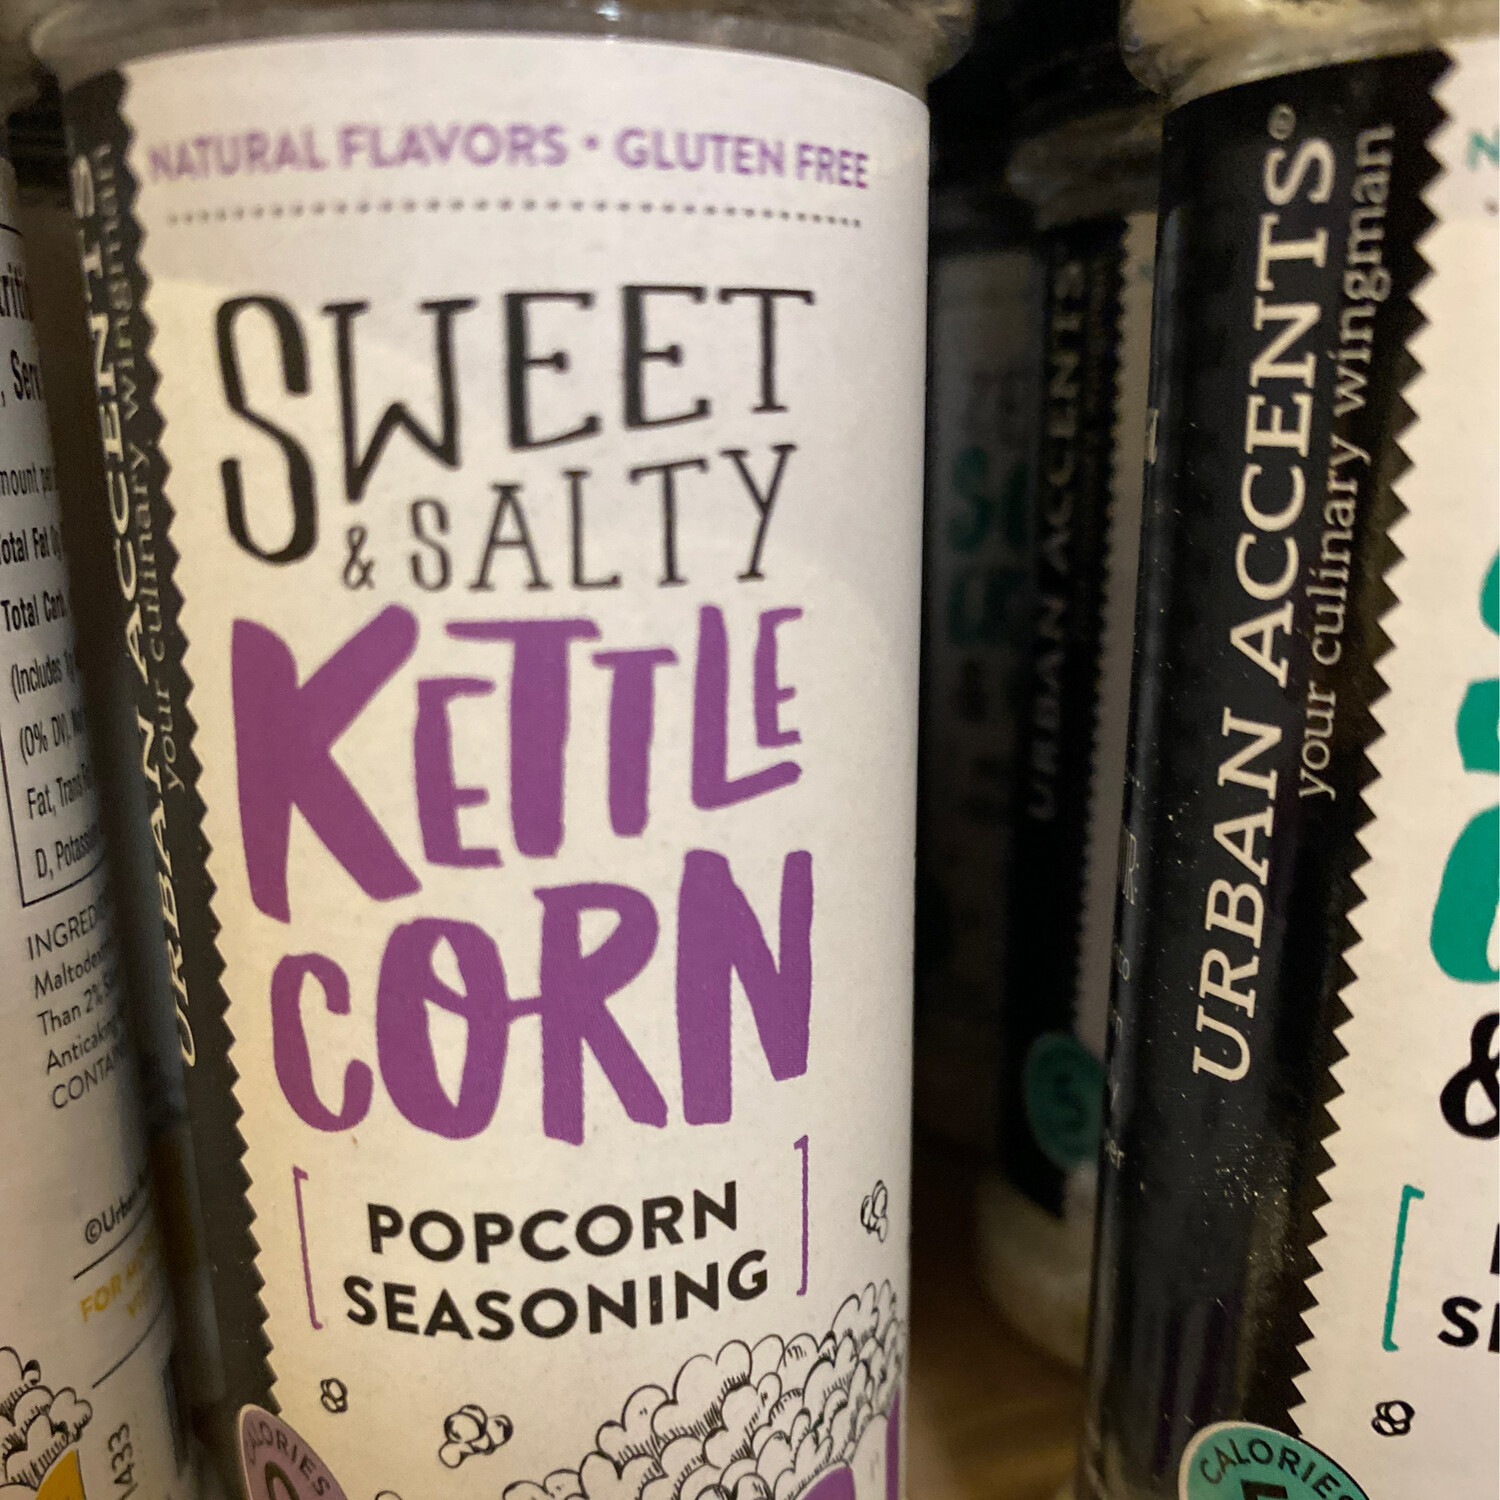 Stonewall Sweet&salty Kettle Corn Popcorn Seasoning